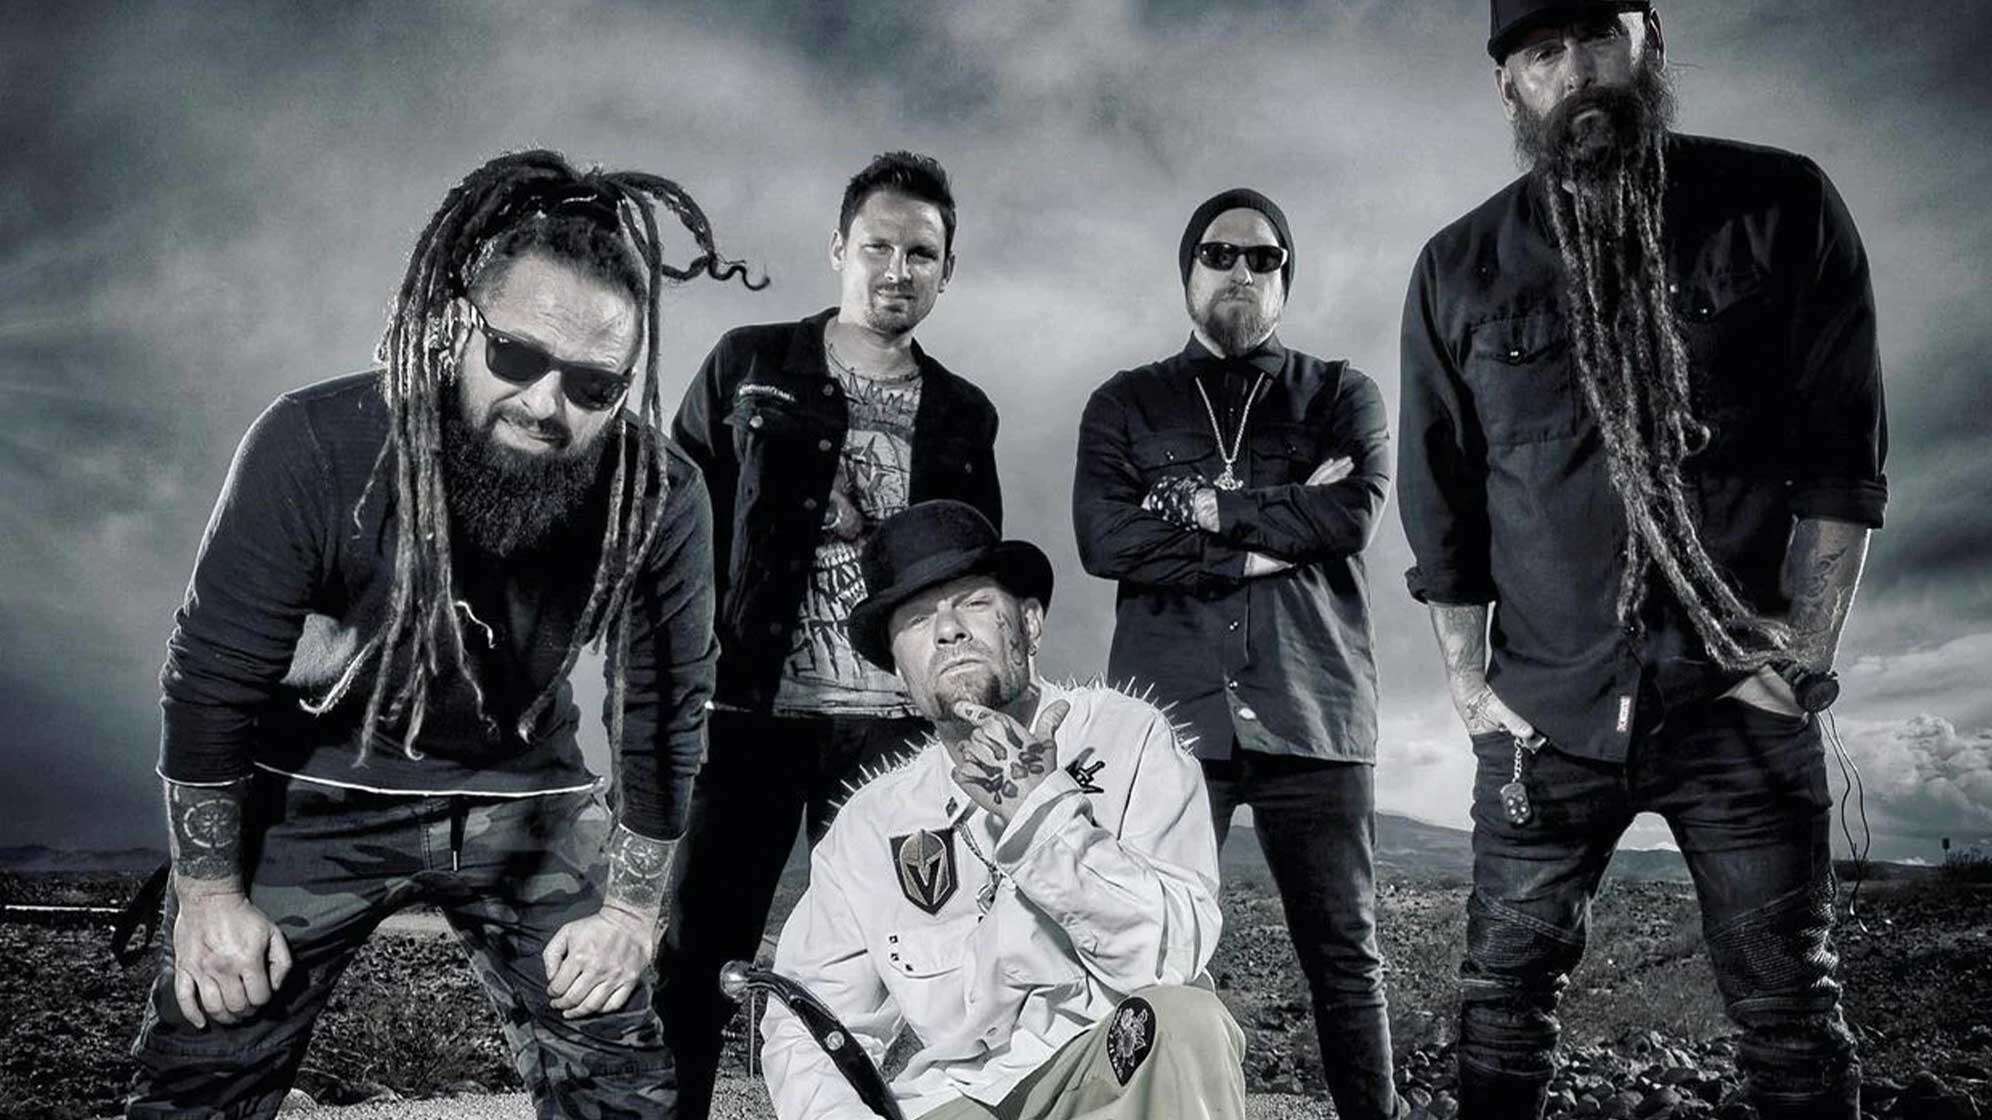 Gruppenfoto der Band Five Finger Death Punch